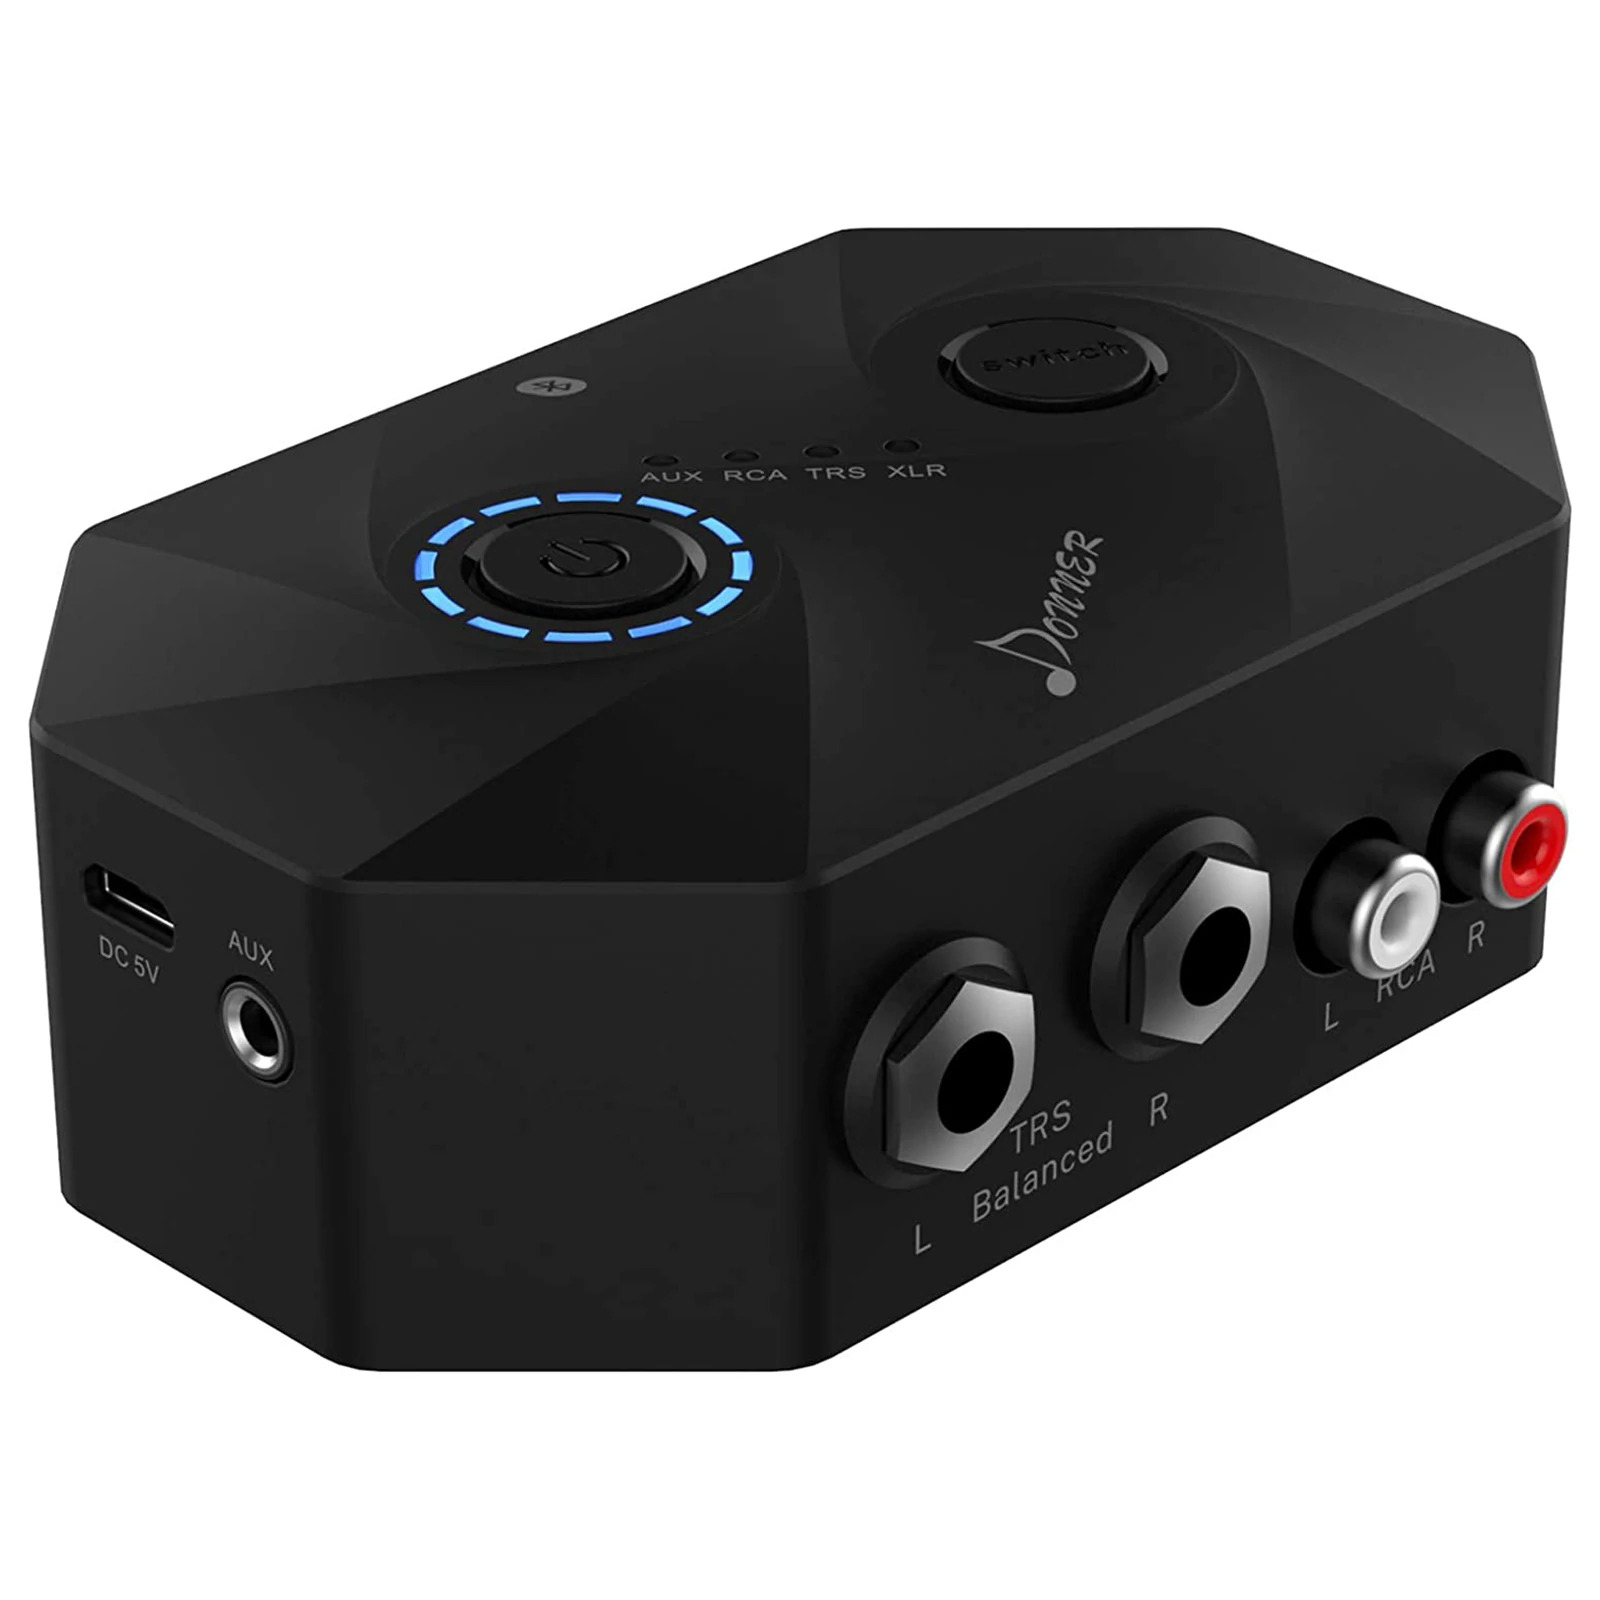 Donner BR2 Bluetooth 5.0 Audio Receiver aptX for Smart Phones/Tablets/Speakers $22.13